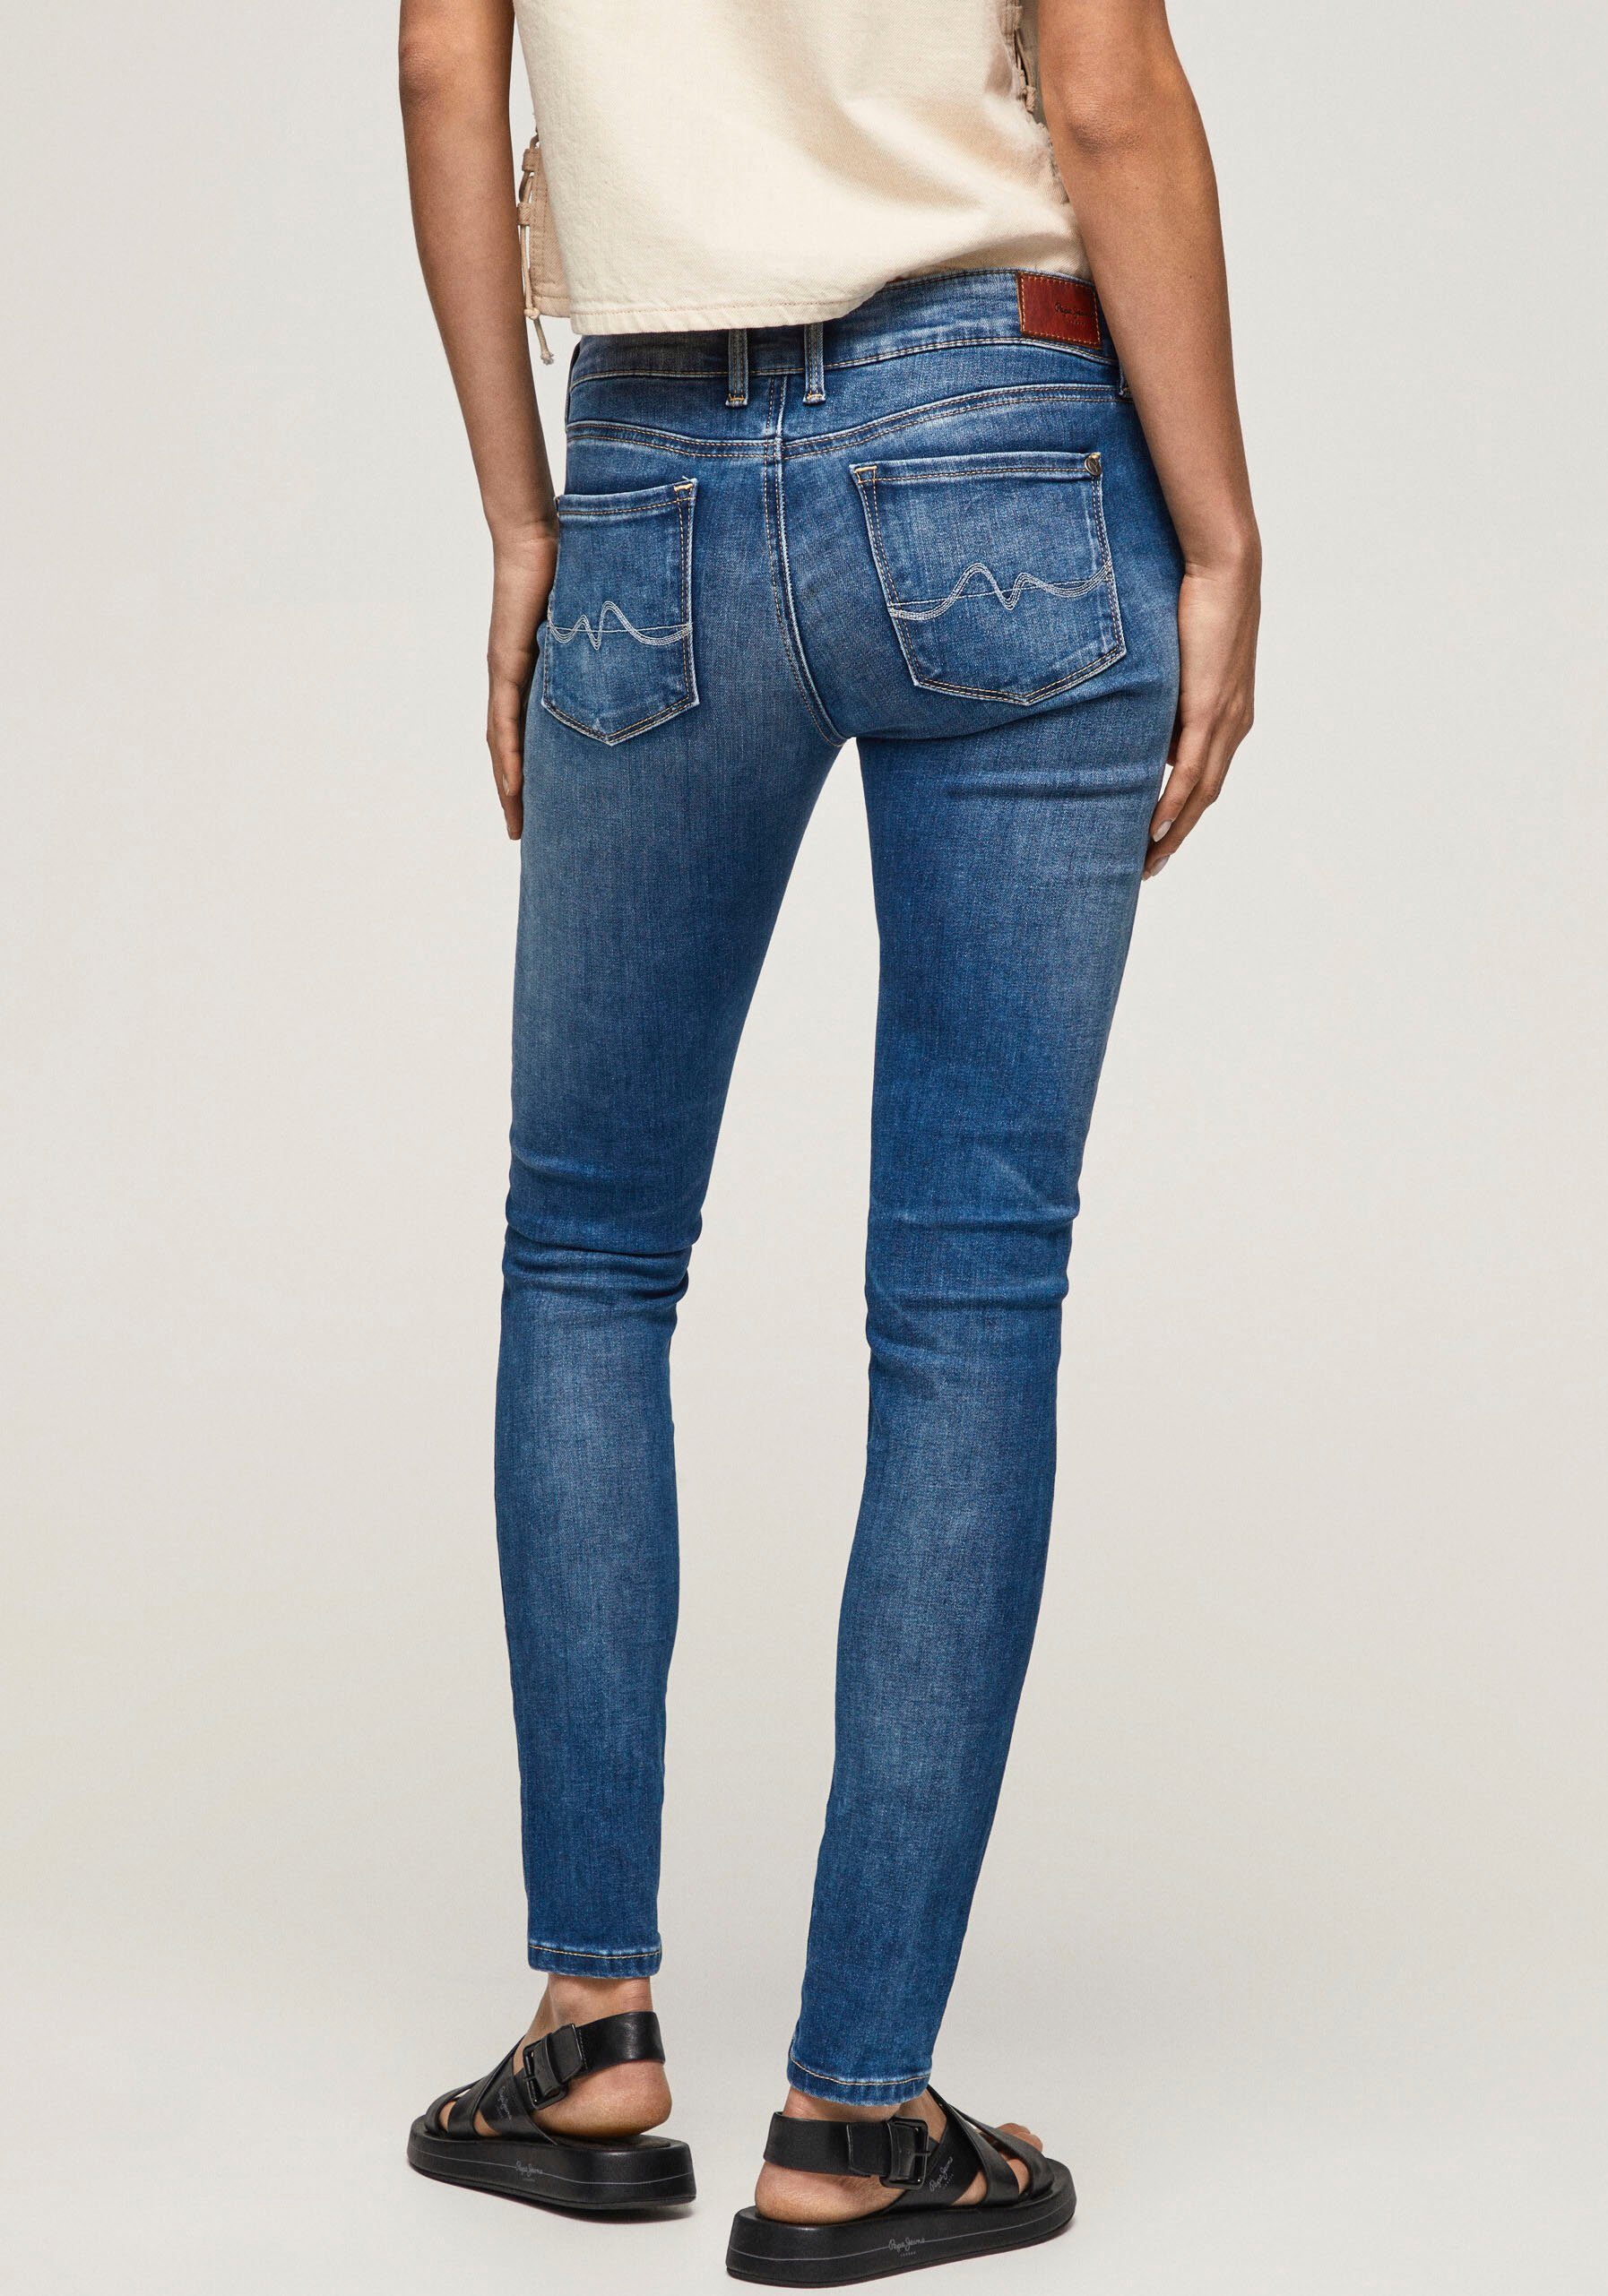 Pepe Jeans Skinny-fit-Jeans mit Stretch-Anteil Bund 1-Knopf SOHO im blue 5-Pocket-Stil und